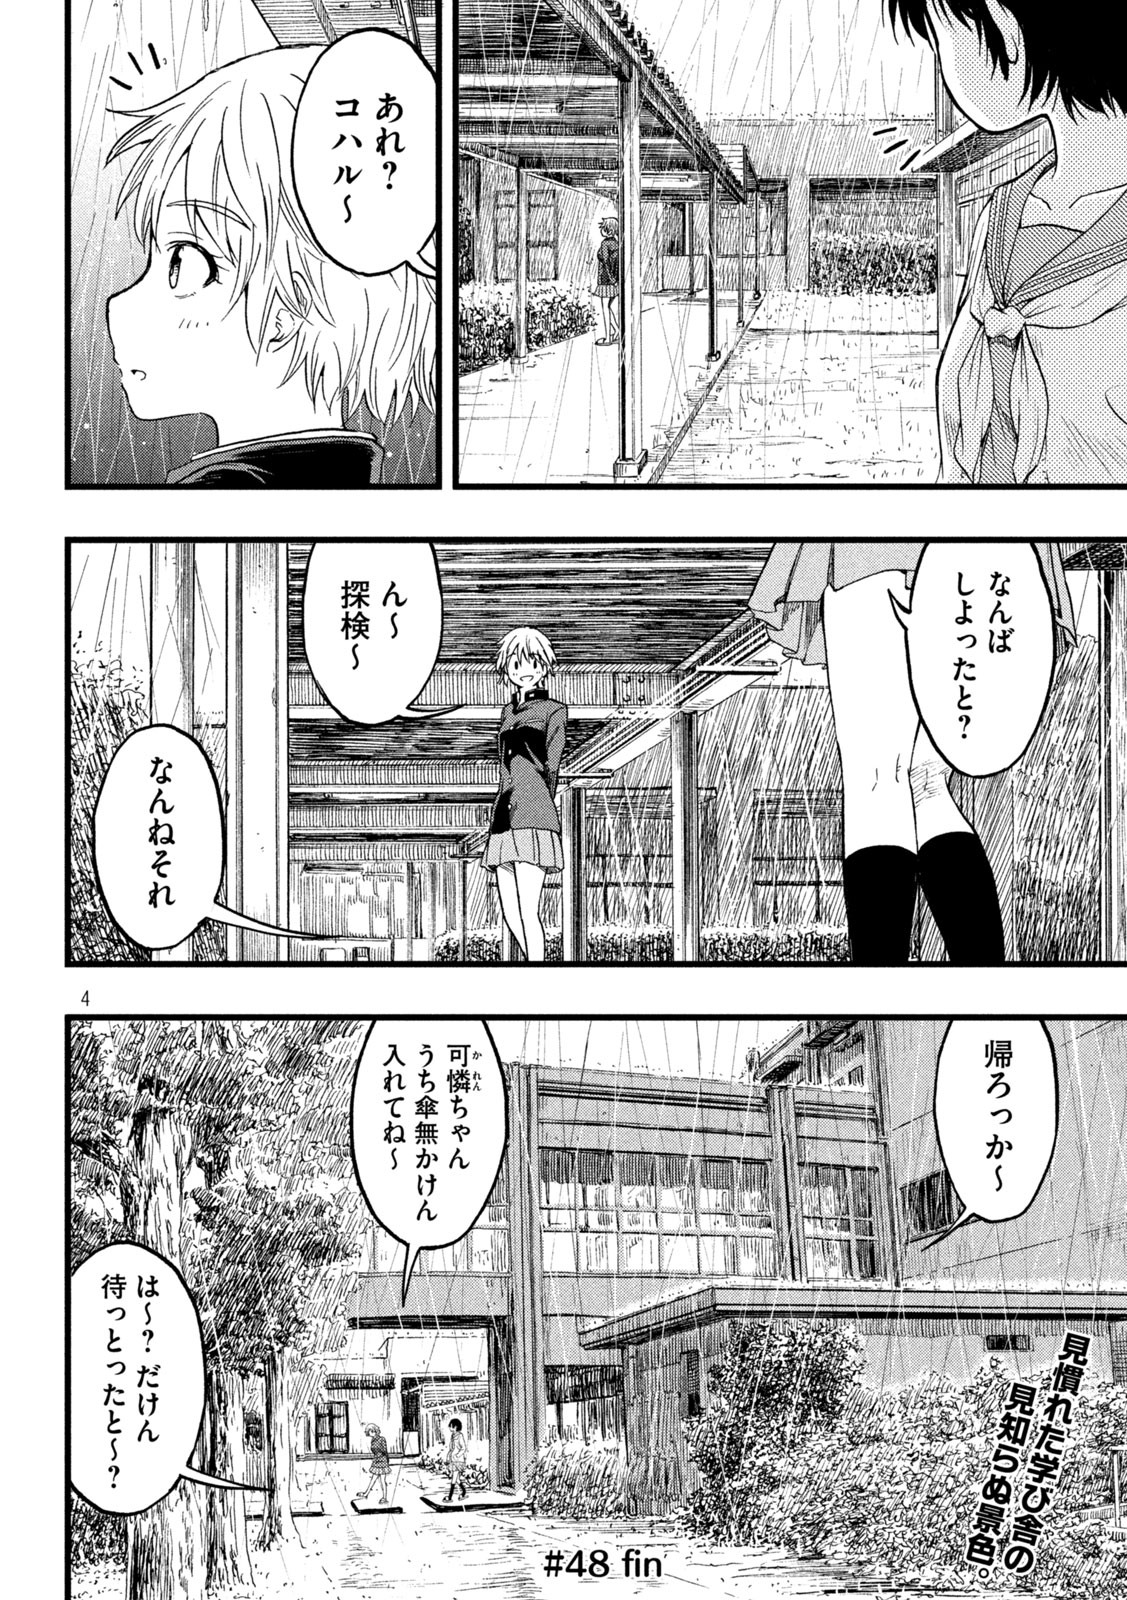 Koharu haru! - Chapter 48 - Page 4